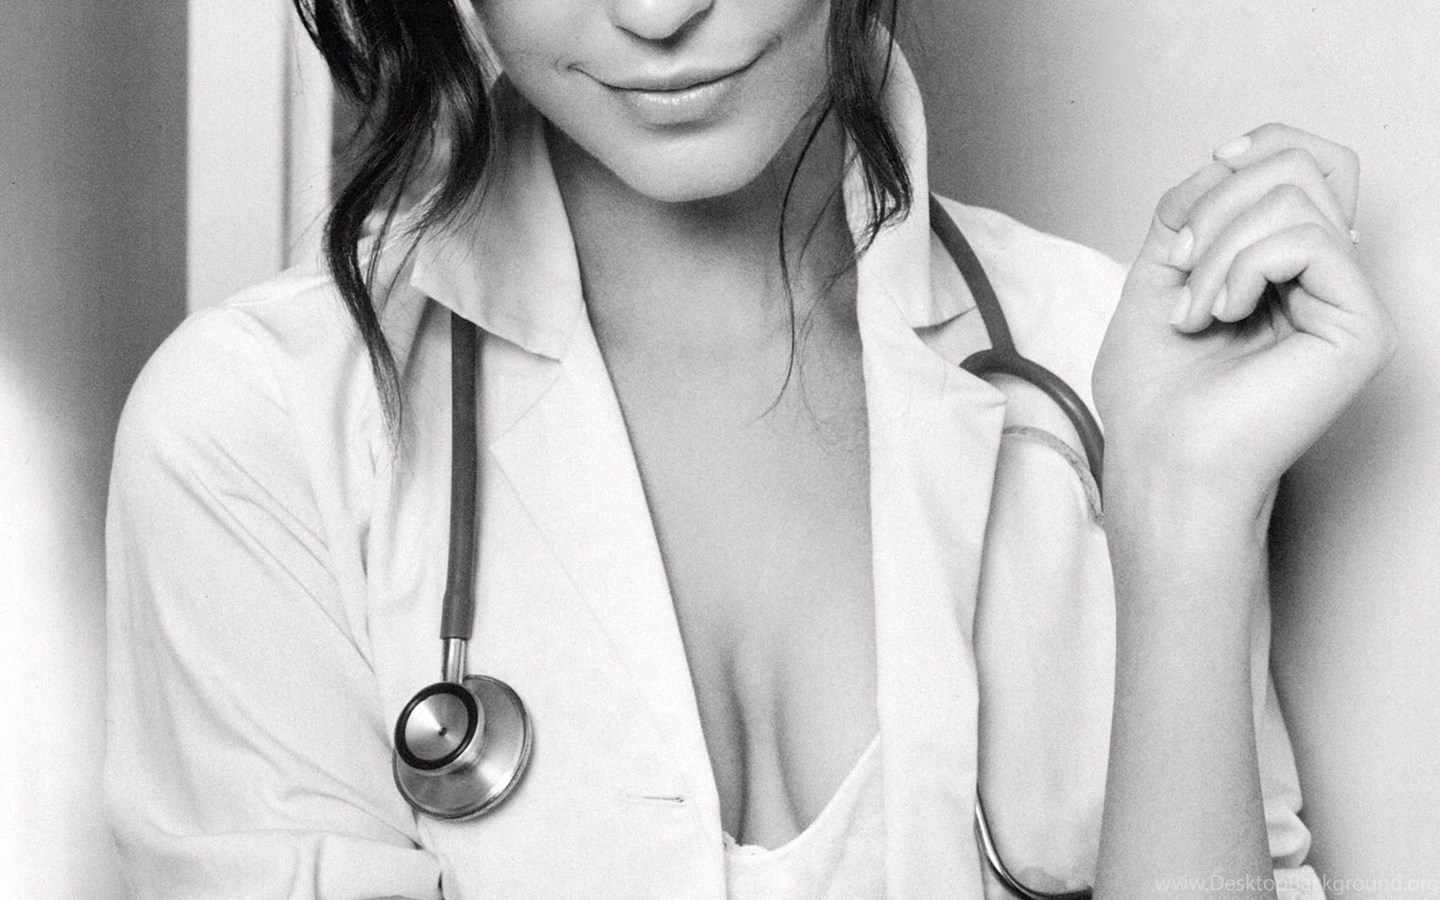 Медсестра красивое видео. Красивые медсестры. Одетт Эннэйбл доктор Хаус. Одетт Эннэйбл трансформеры. Одетт Эннэйбл фото.